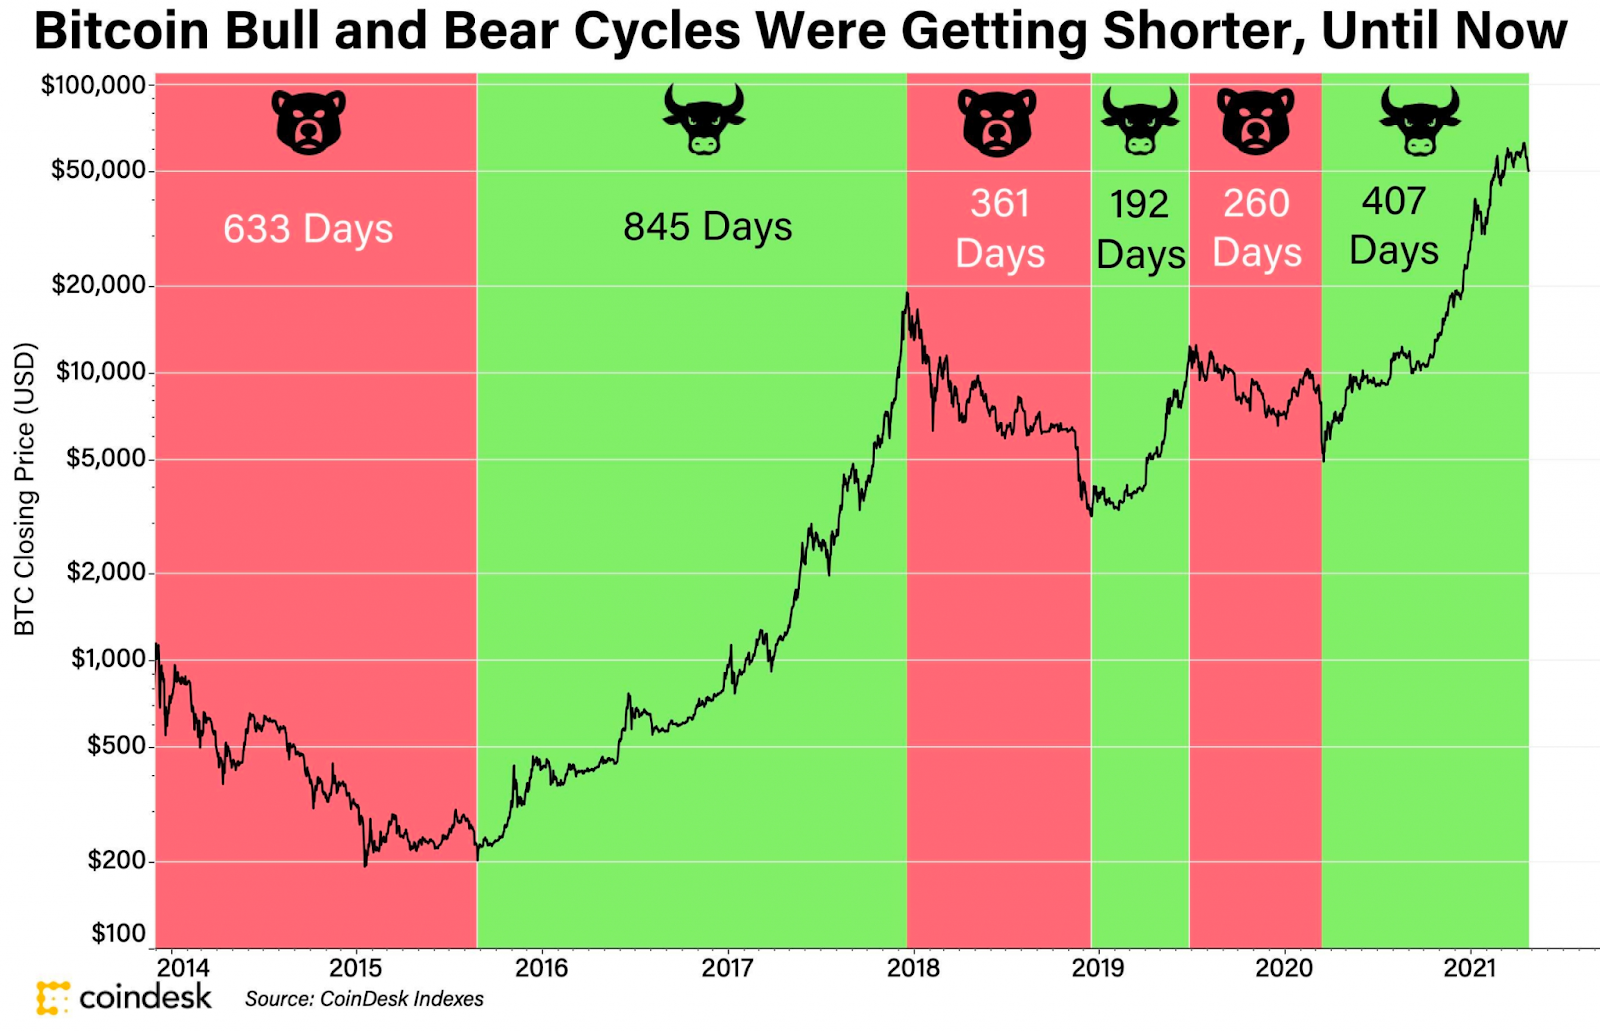 Bitcoin Bull and Bear Cycles